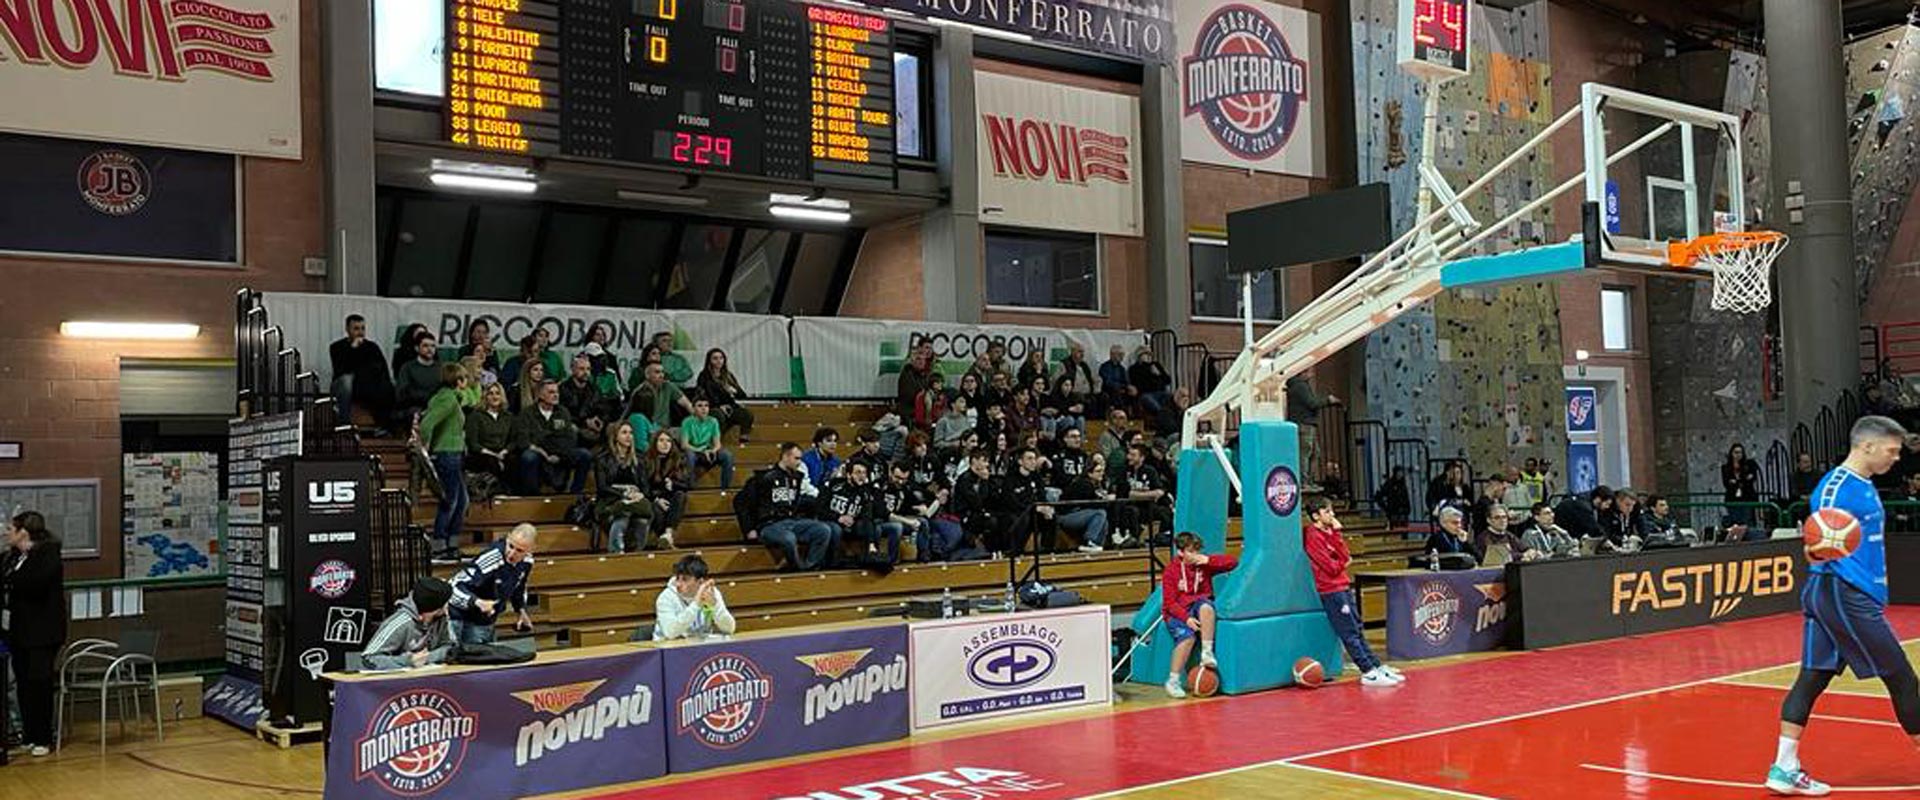 Riccoboni fans propel Monferrato Basket to victory